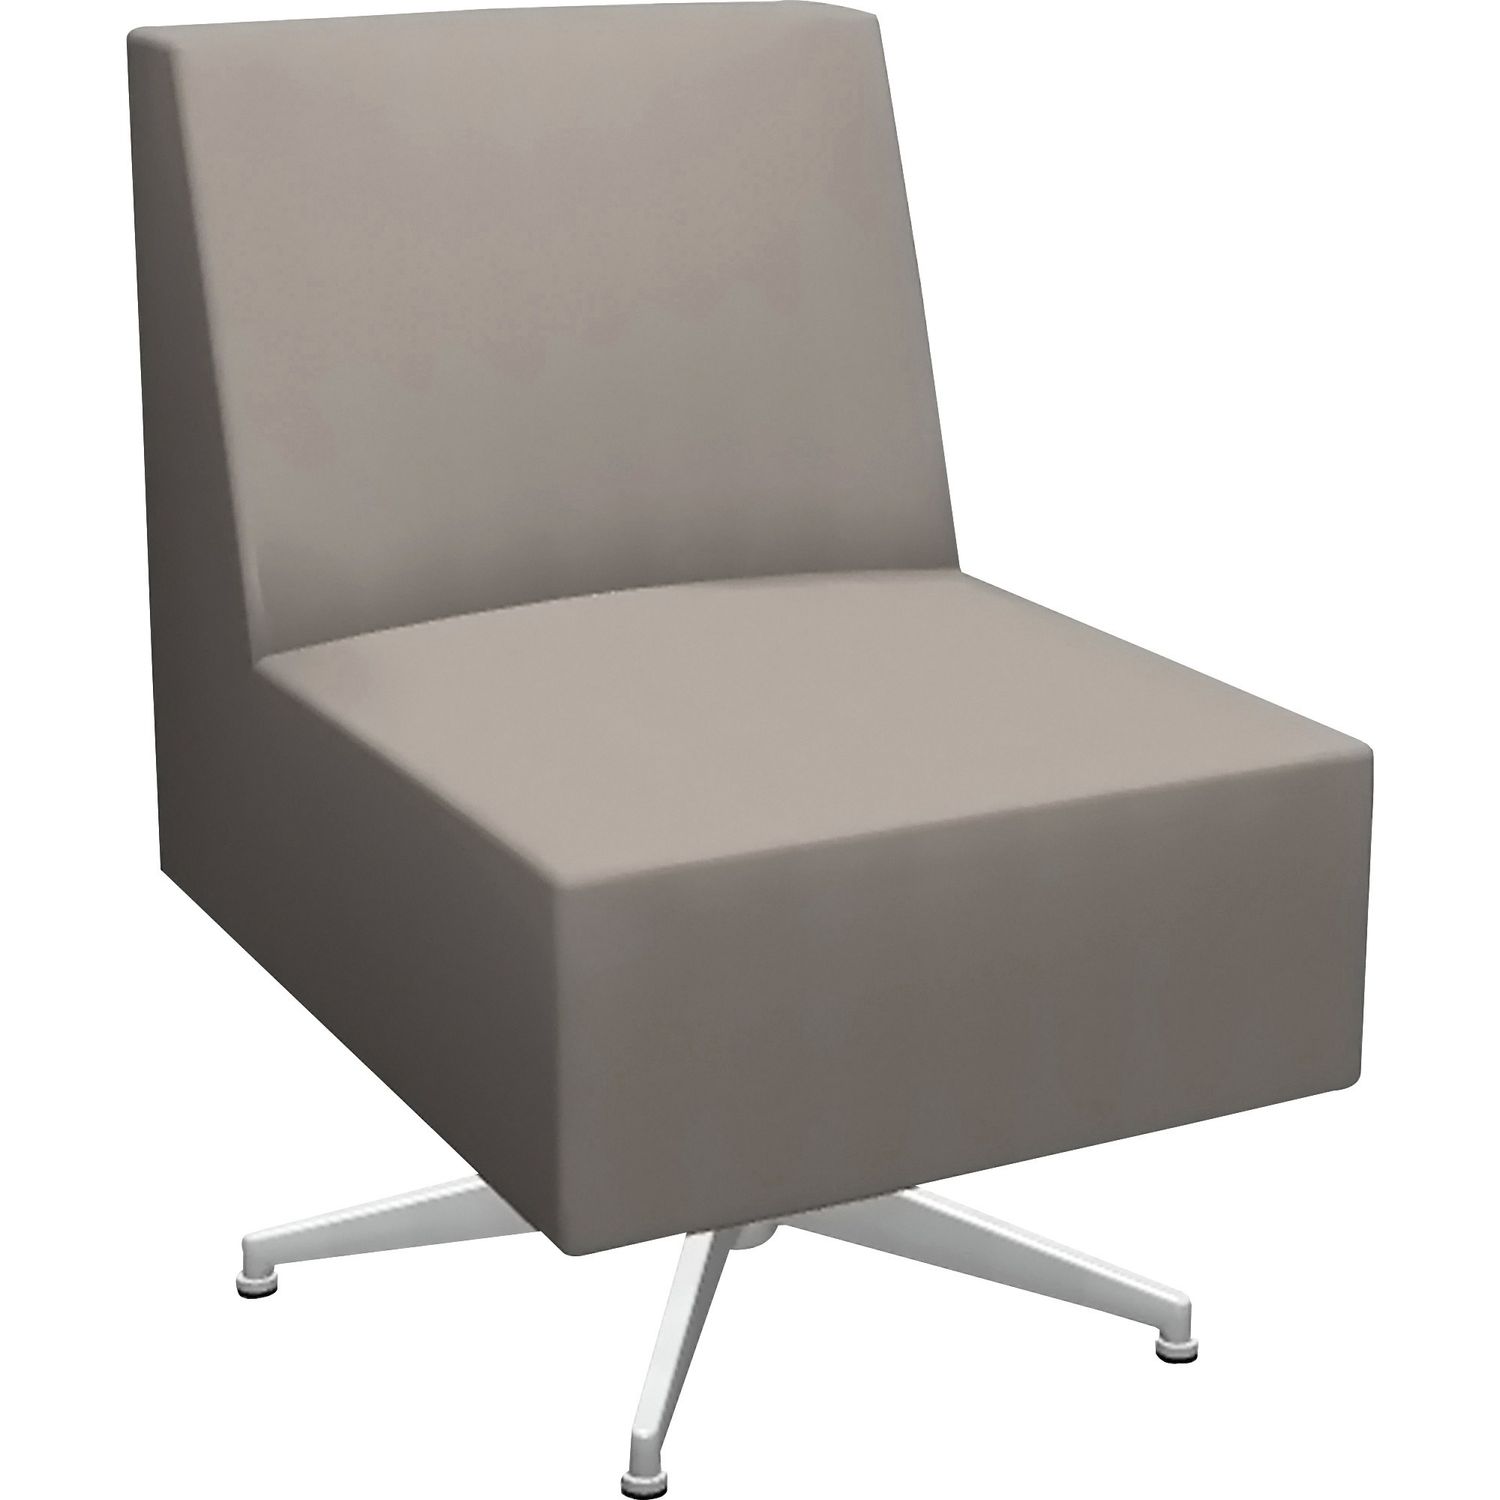 Armless Chair 31" x 25.5" x 34" Chair, 25" x 20" x 19.5" Chair Seat, 16" Chair Back, Material: Hardwood Frame, Finish: Chrome Base, Taupe, Smoke